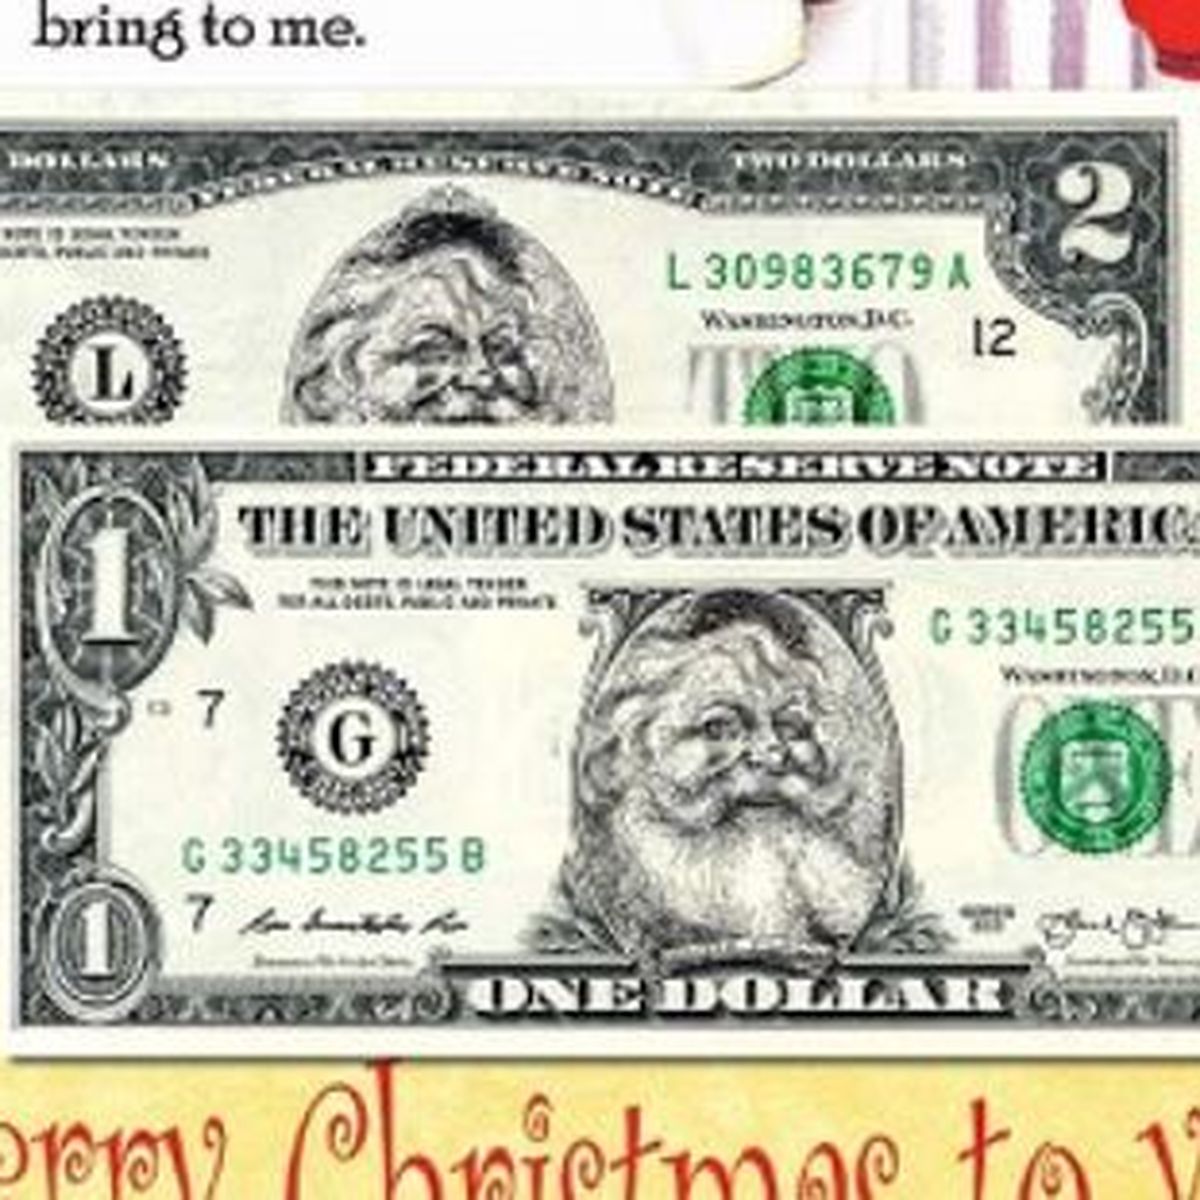 XMAS OFFICIAL Genuine Legal Tender U.S MERRY CHRISTMAS SANTA CLAUS $2 Bill 